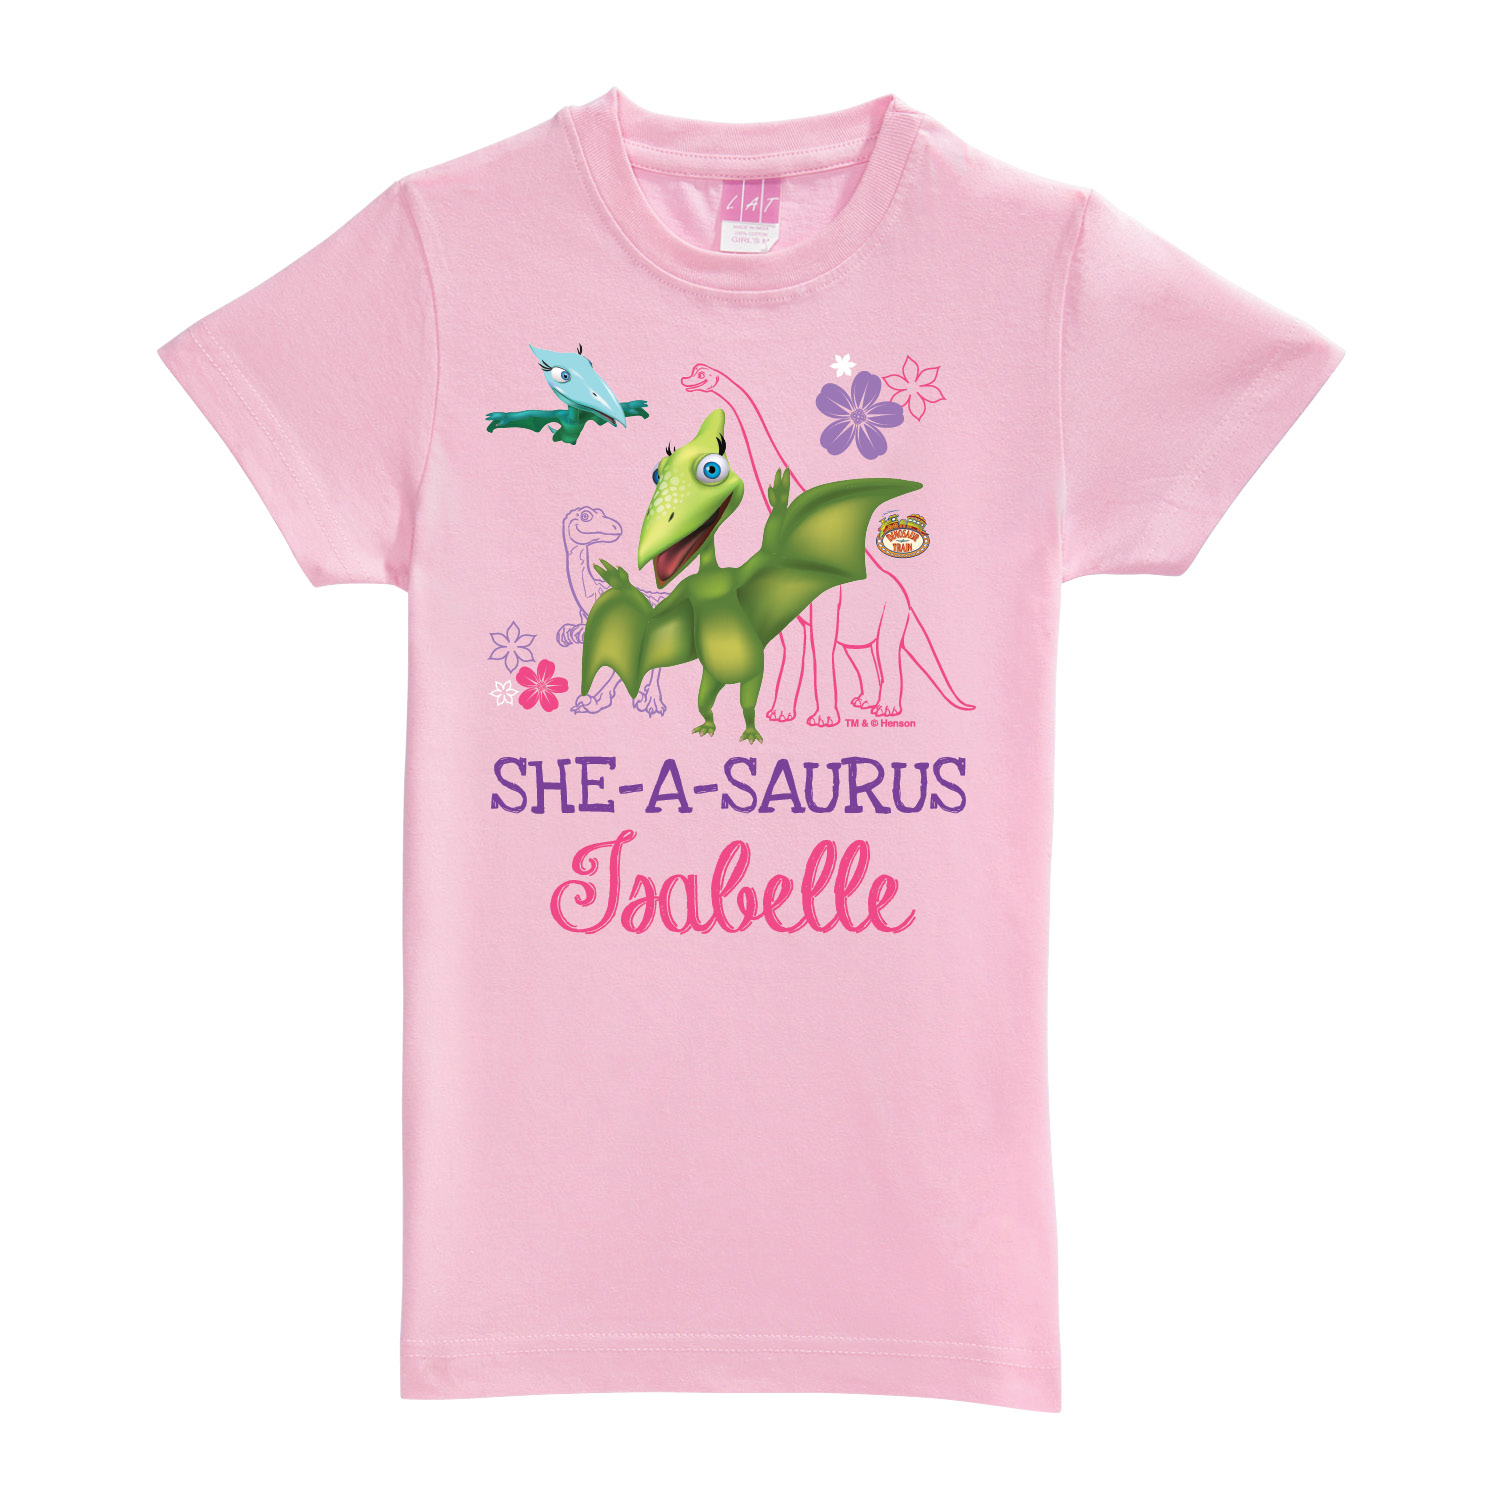 Dinosaur Train She-a-saurus Pink Fitted Tee